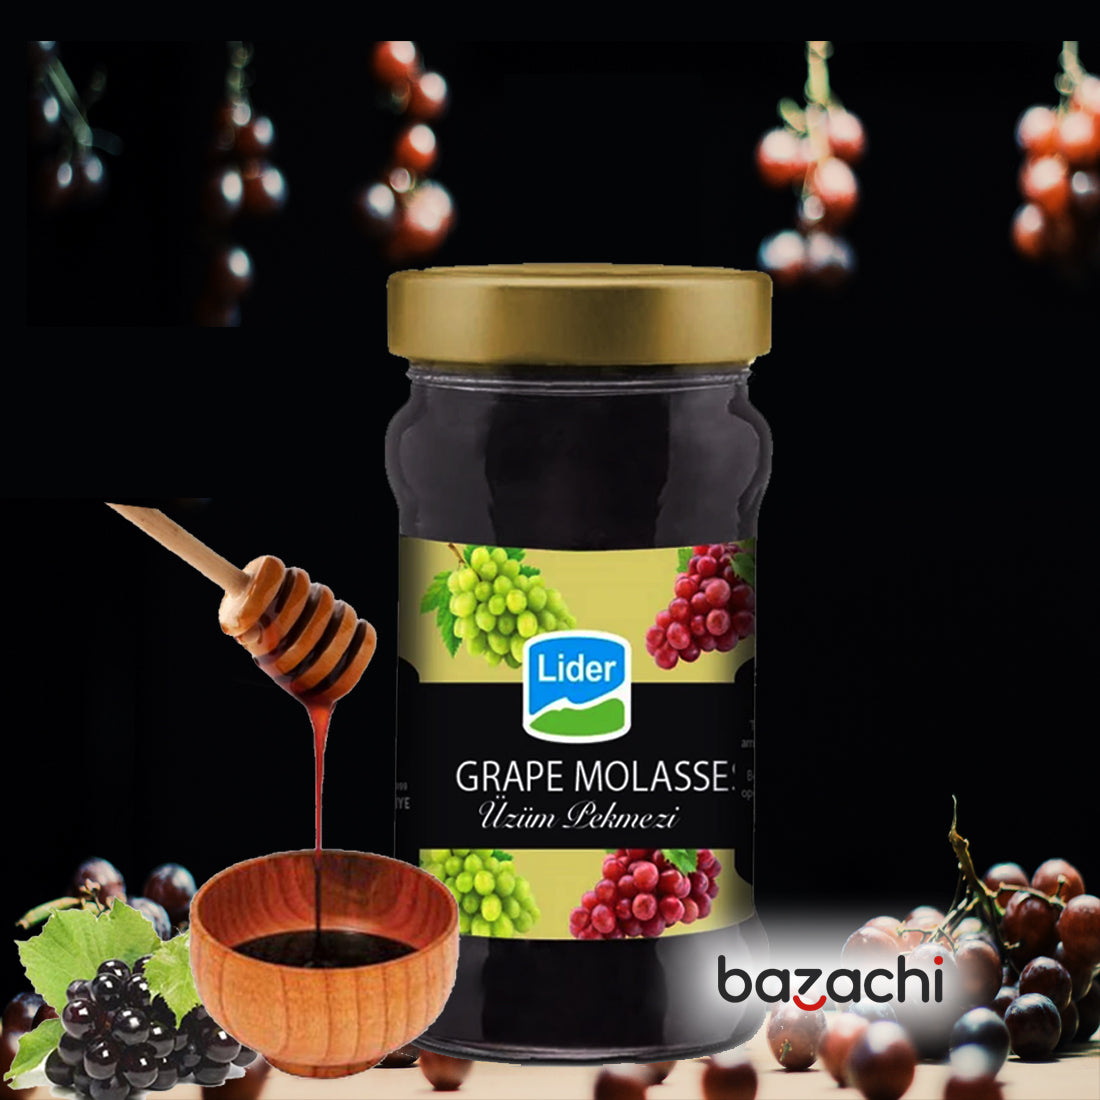 Lider Grape Molasses - Uzum Pekmezi (380g)